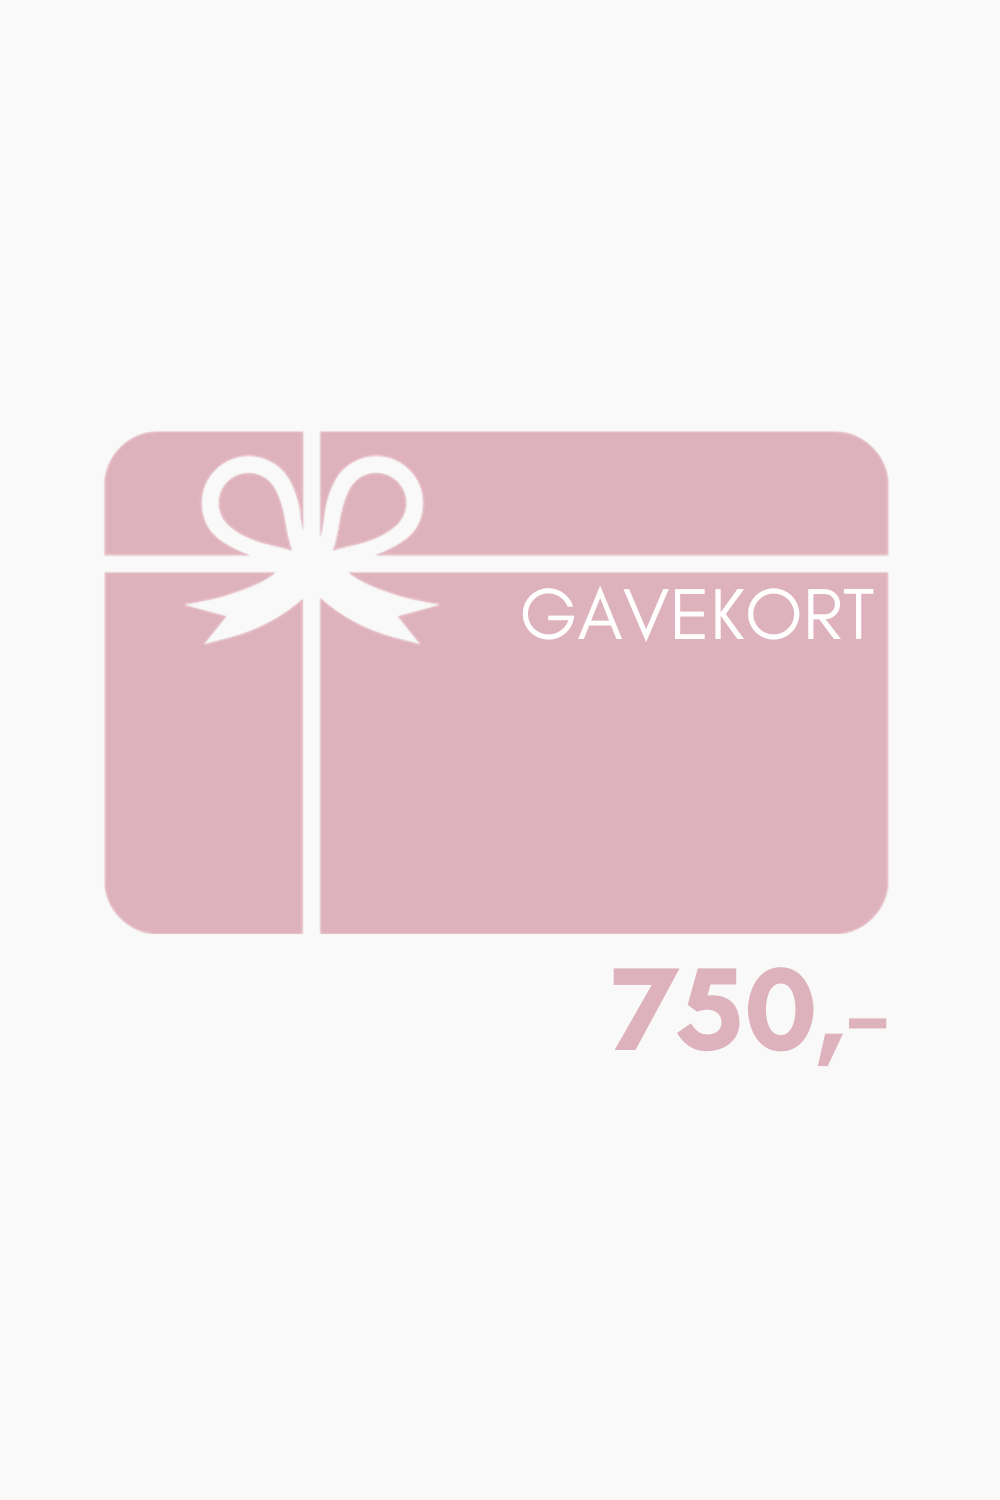 QNTS Gavekort 750 kr